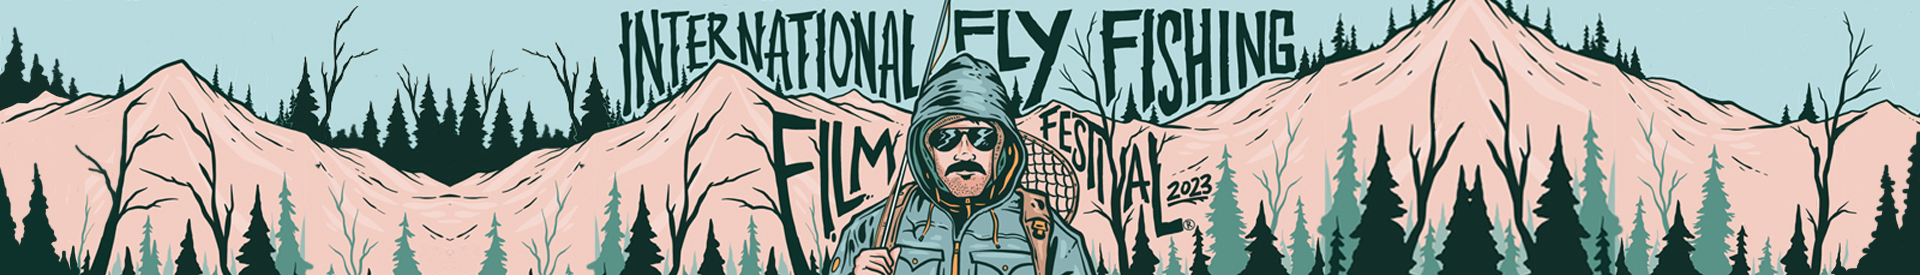 International Fly Fishing Film Festival